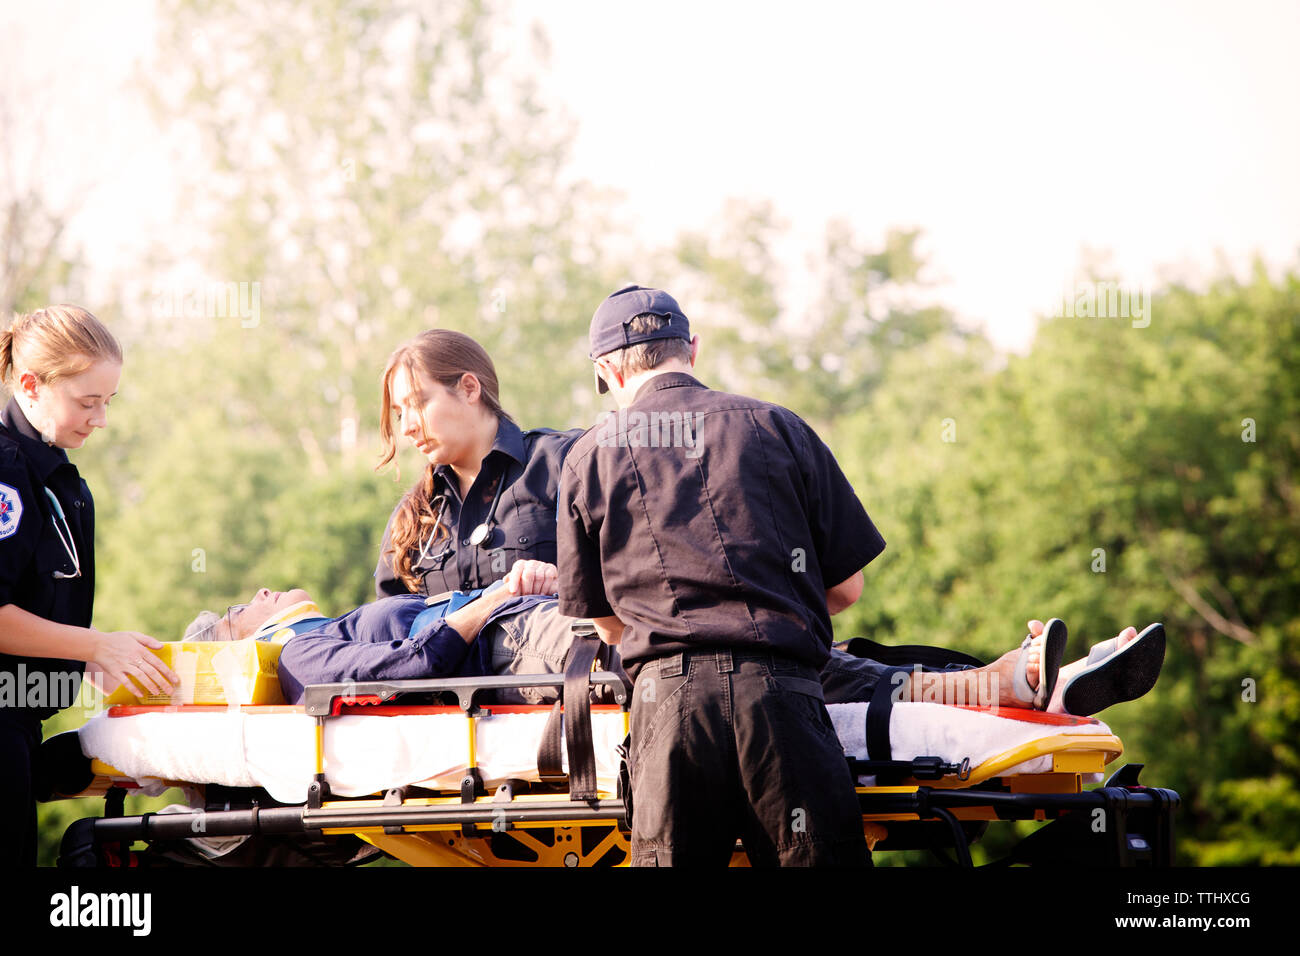 Paramedics giving treatment to patient on hospital gurney Stock Photo